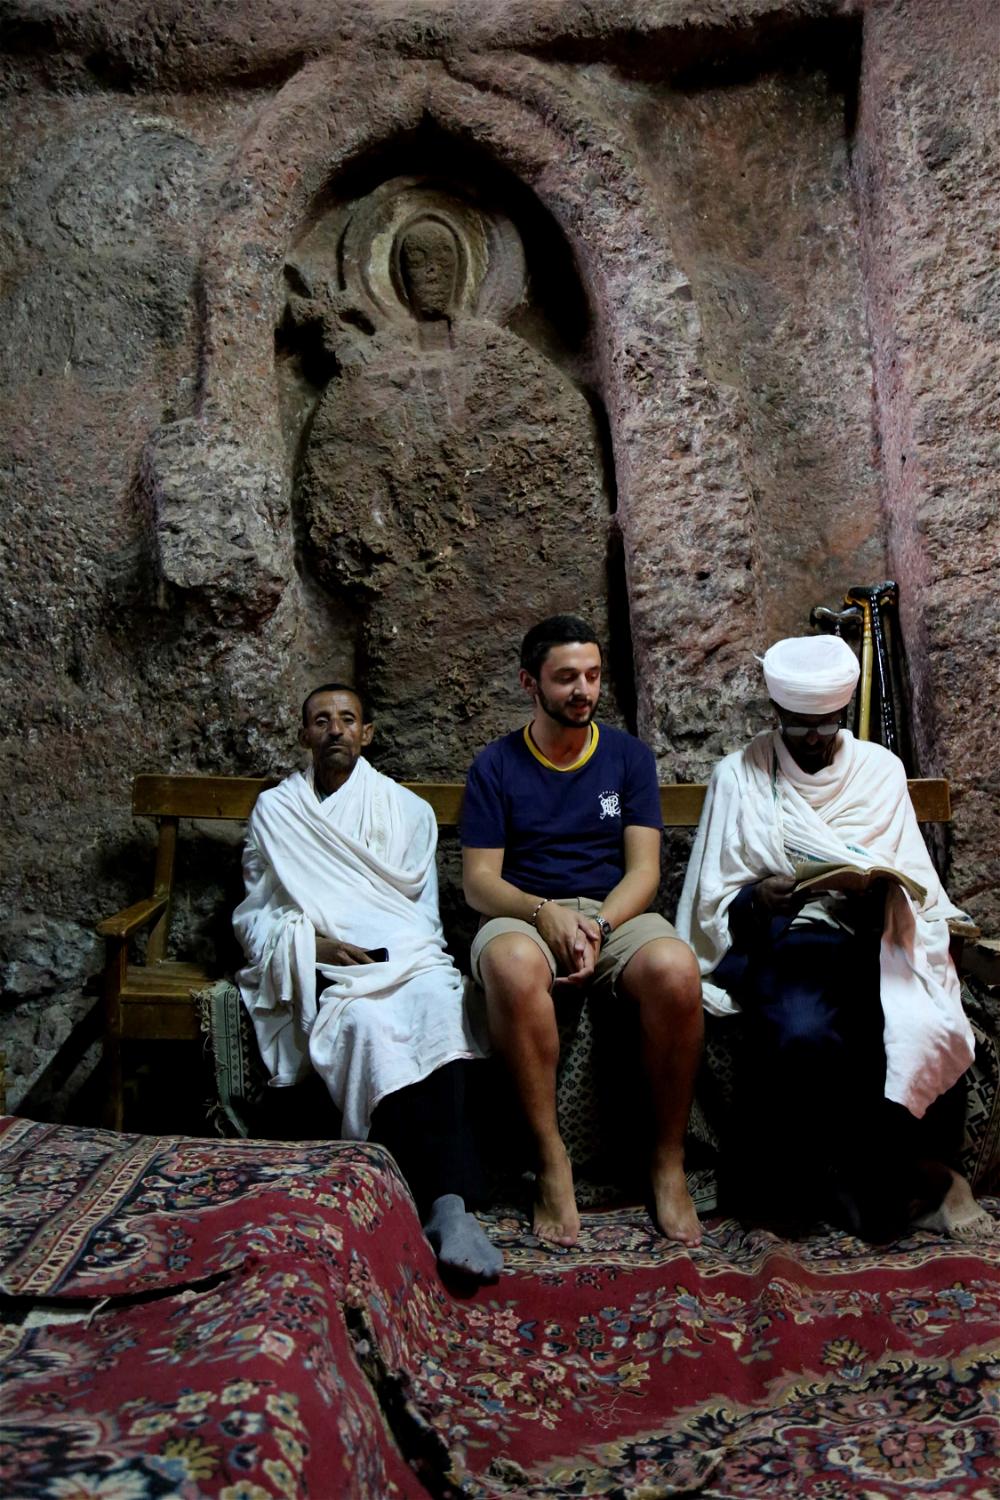 Daniel during his African travels in Lalibela, Ethiopia